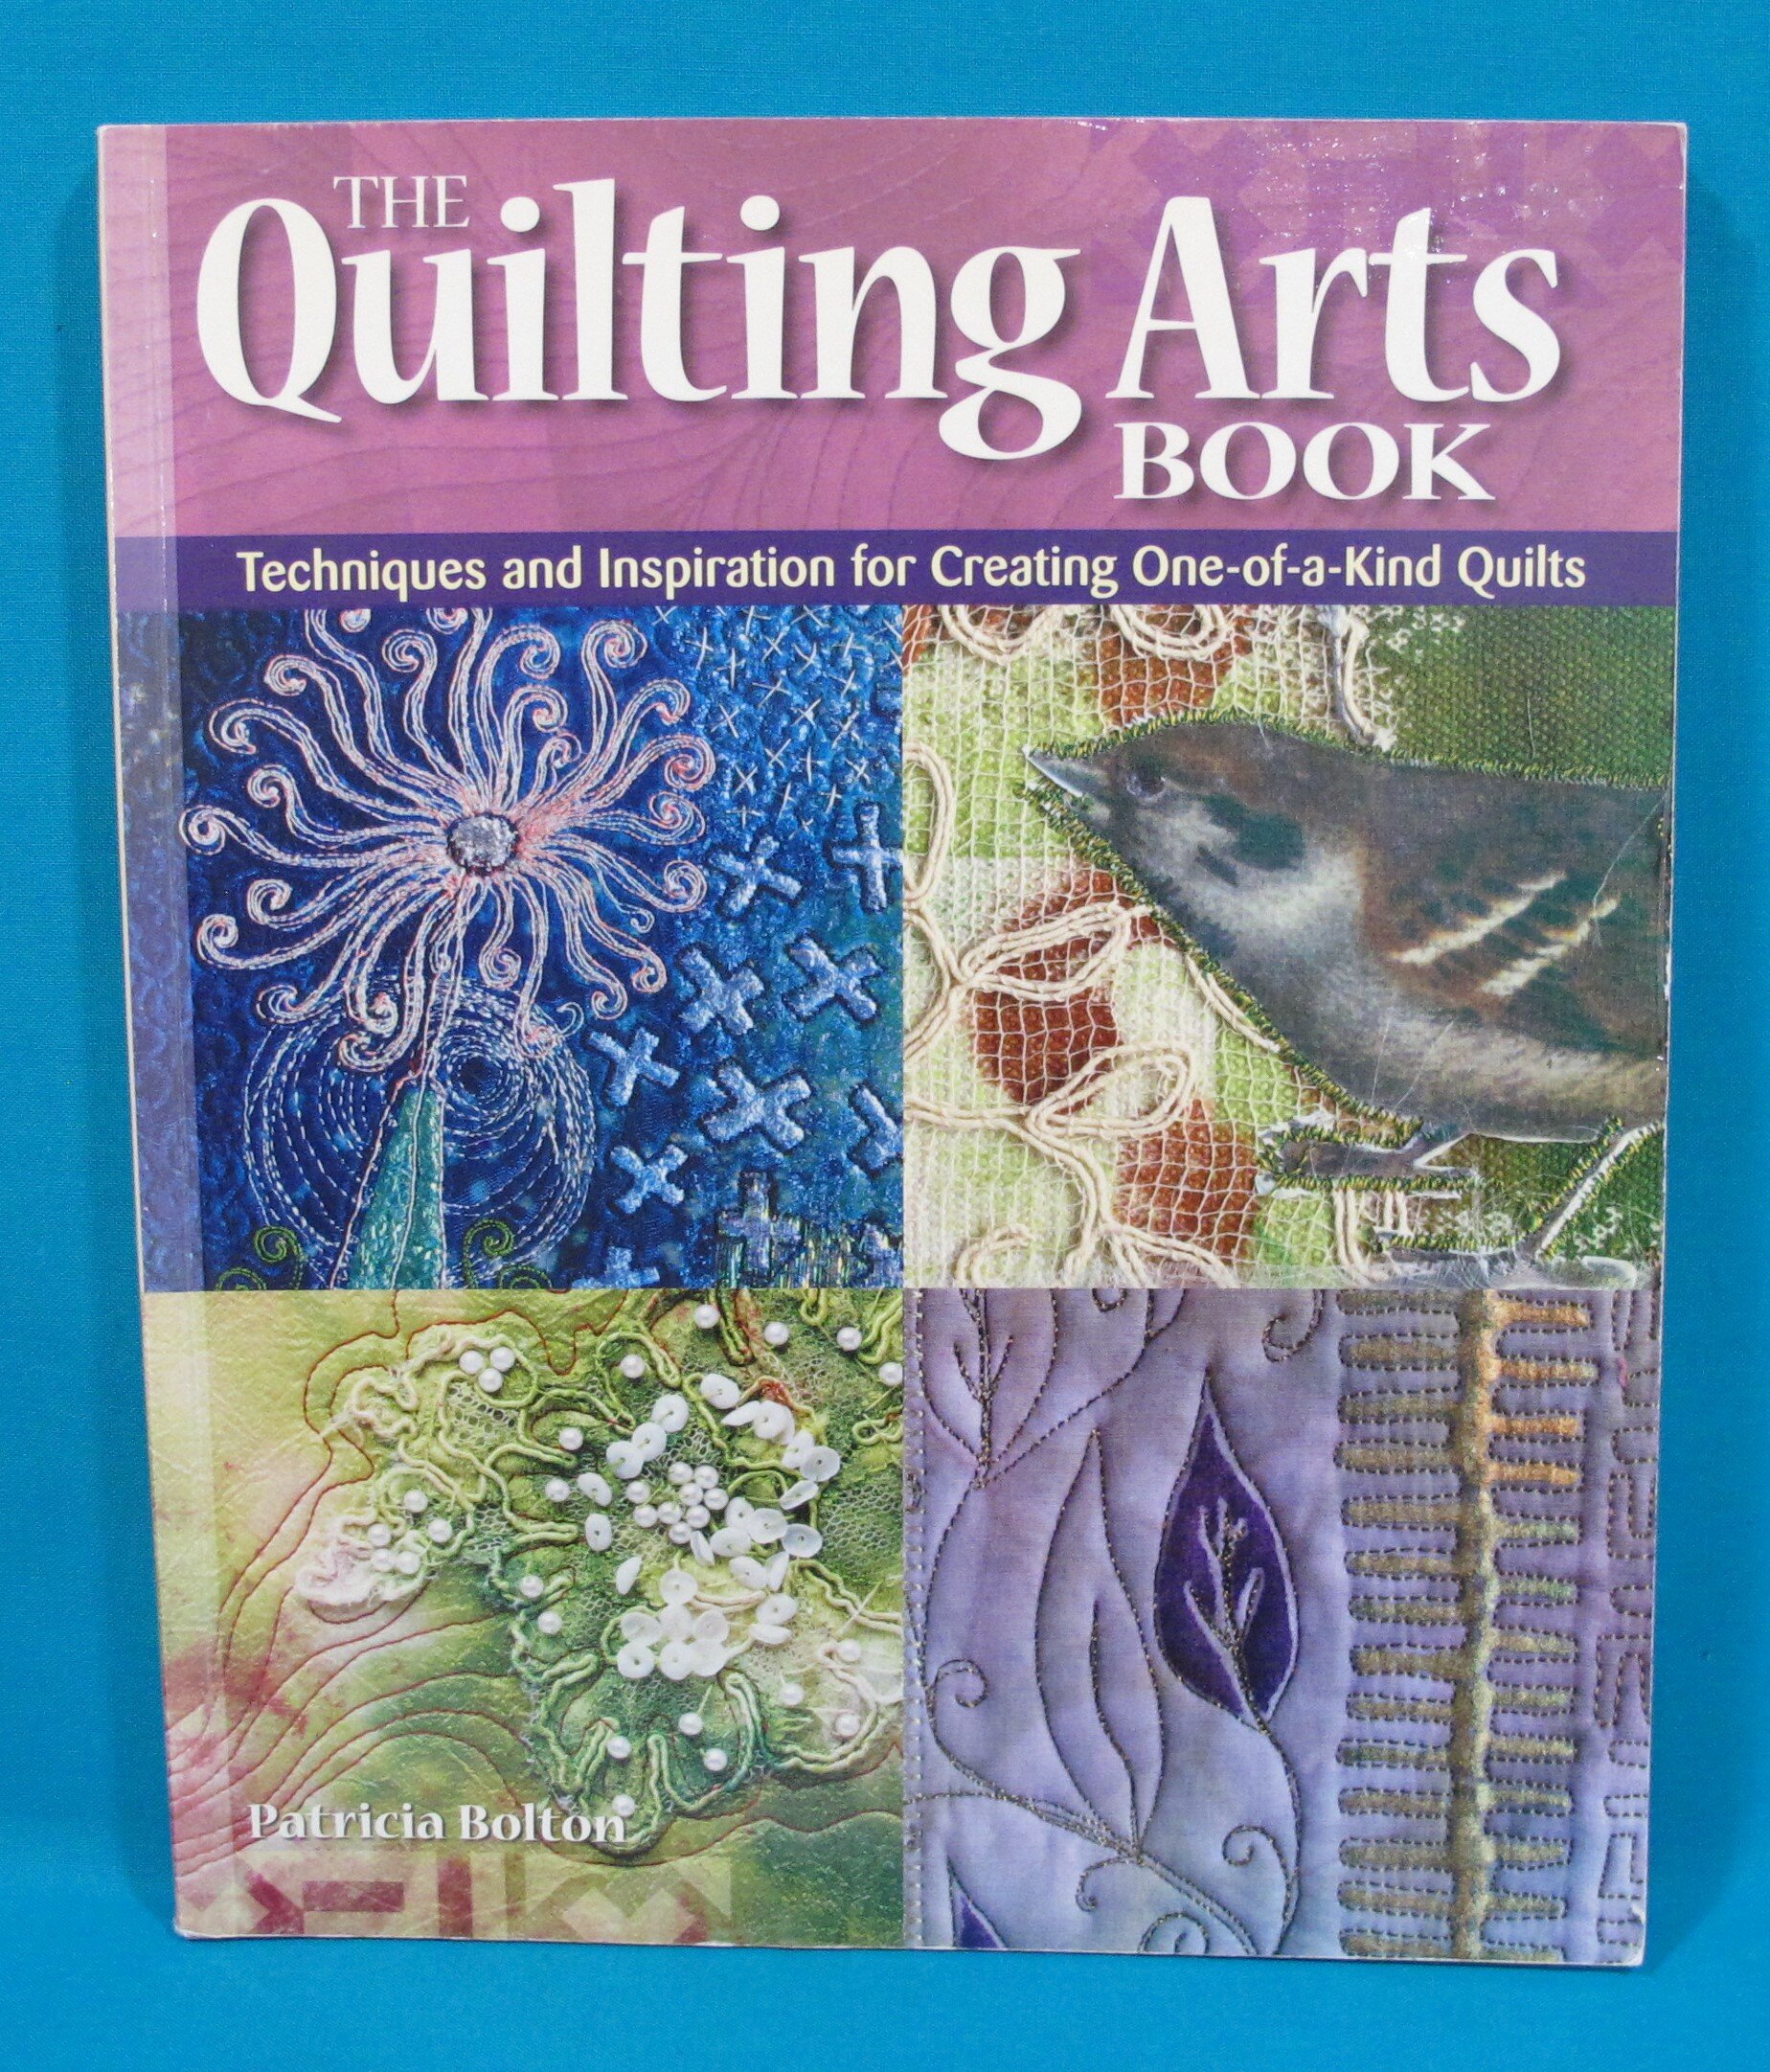 Quilting Arts Book.JPG